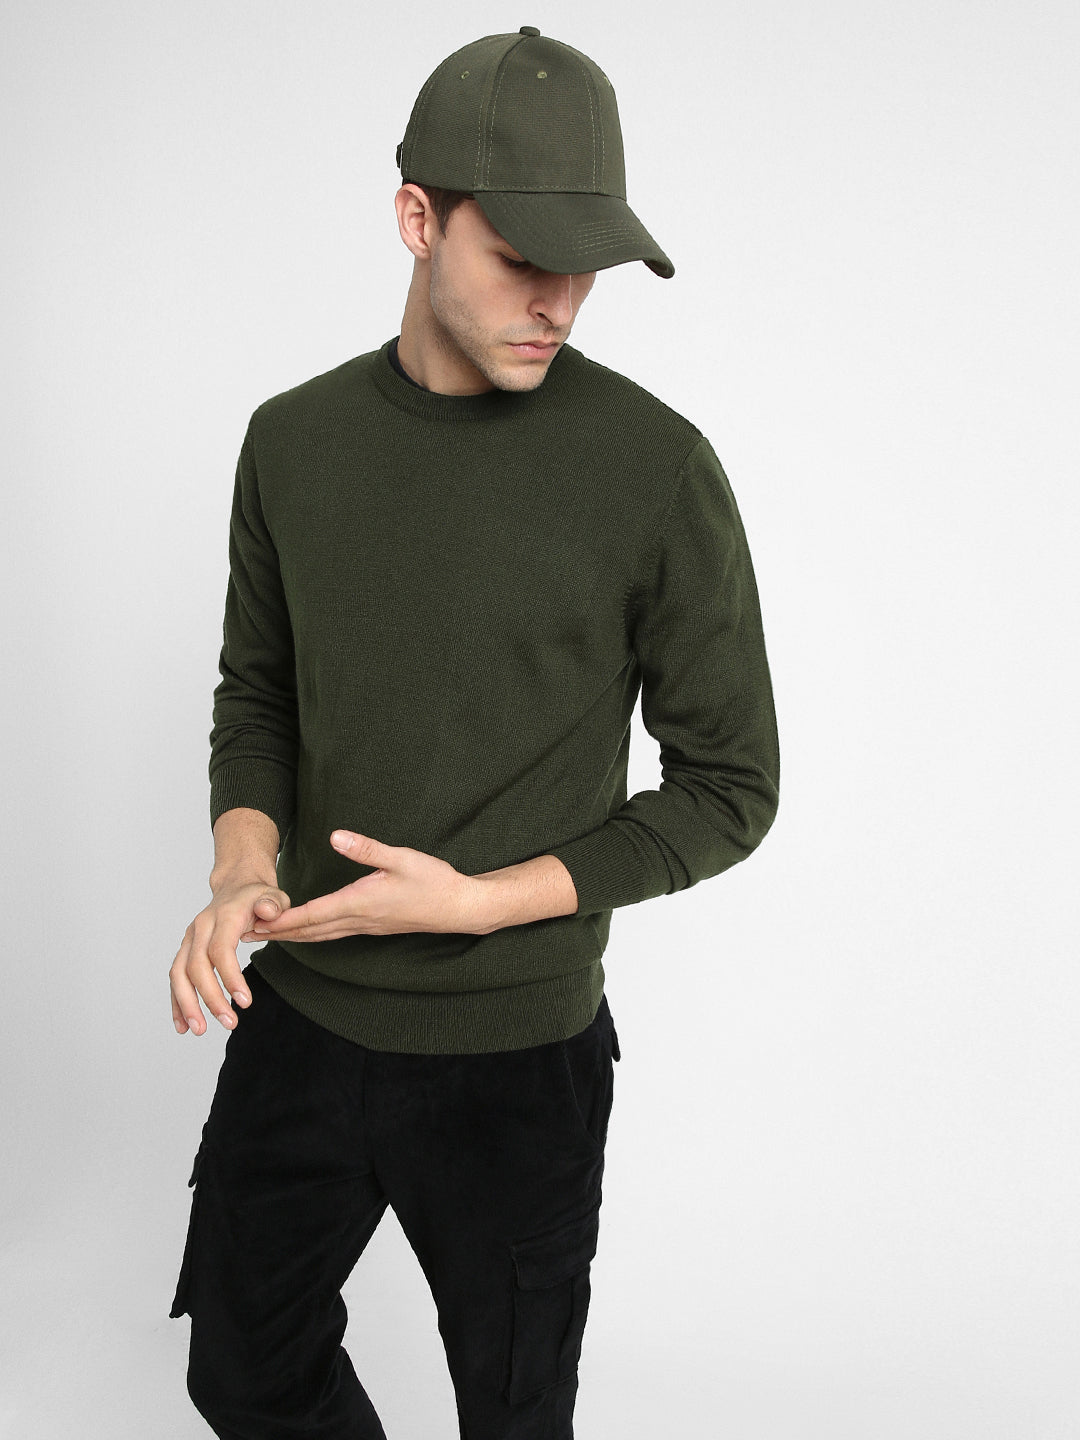 Dennis Lingo Men's Teal Green Colorblock Raglan Mock Full Sleeves Full Zip Sweater